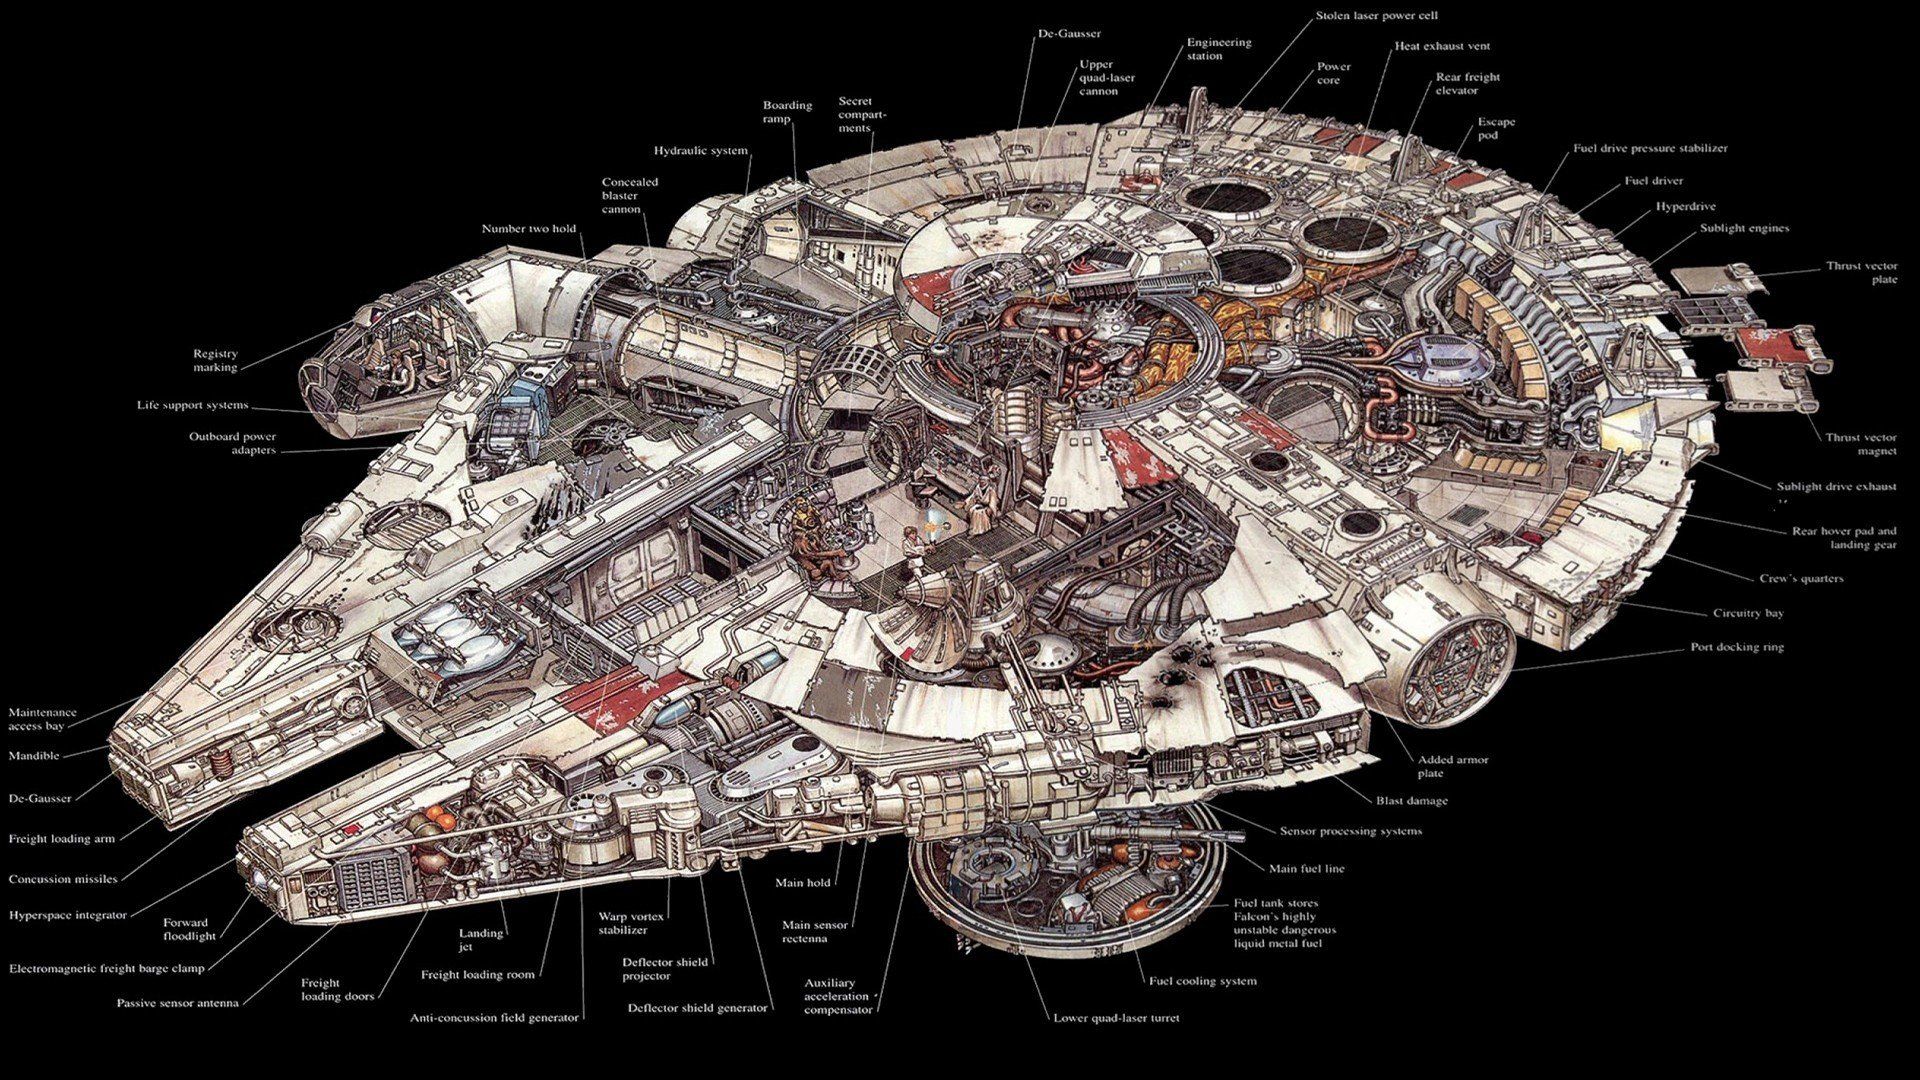 Star Wars Millennium Falcon schematic science fiction wallpaper ...